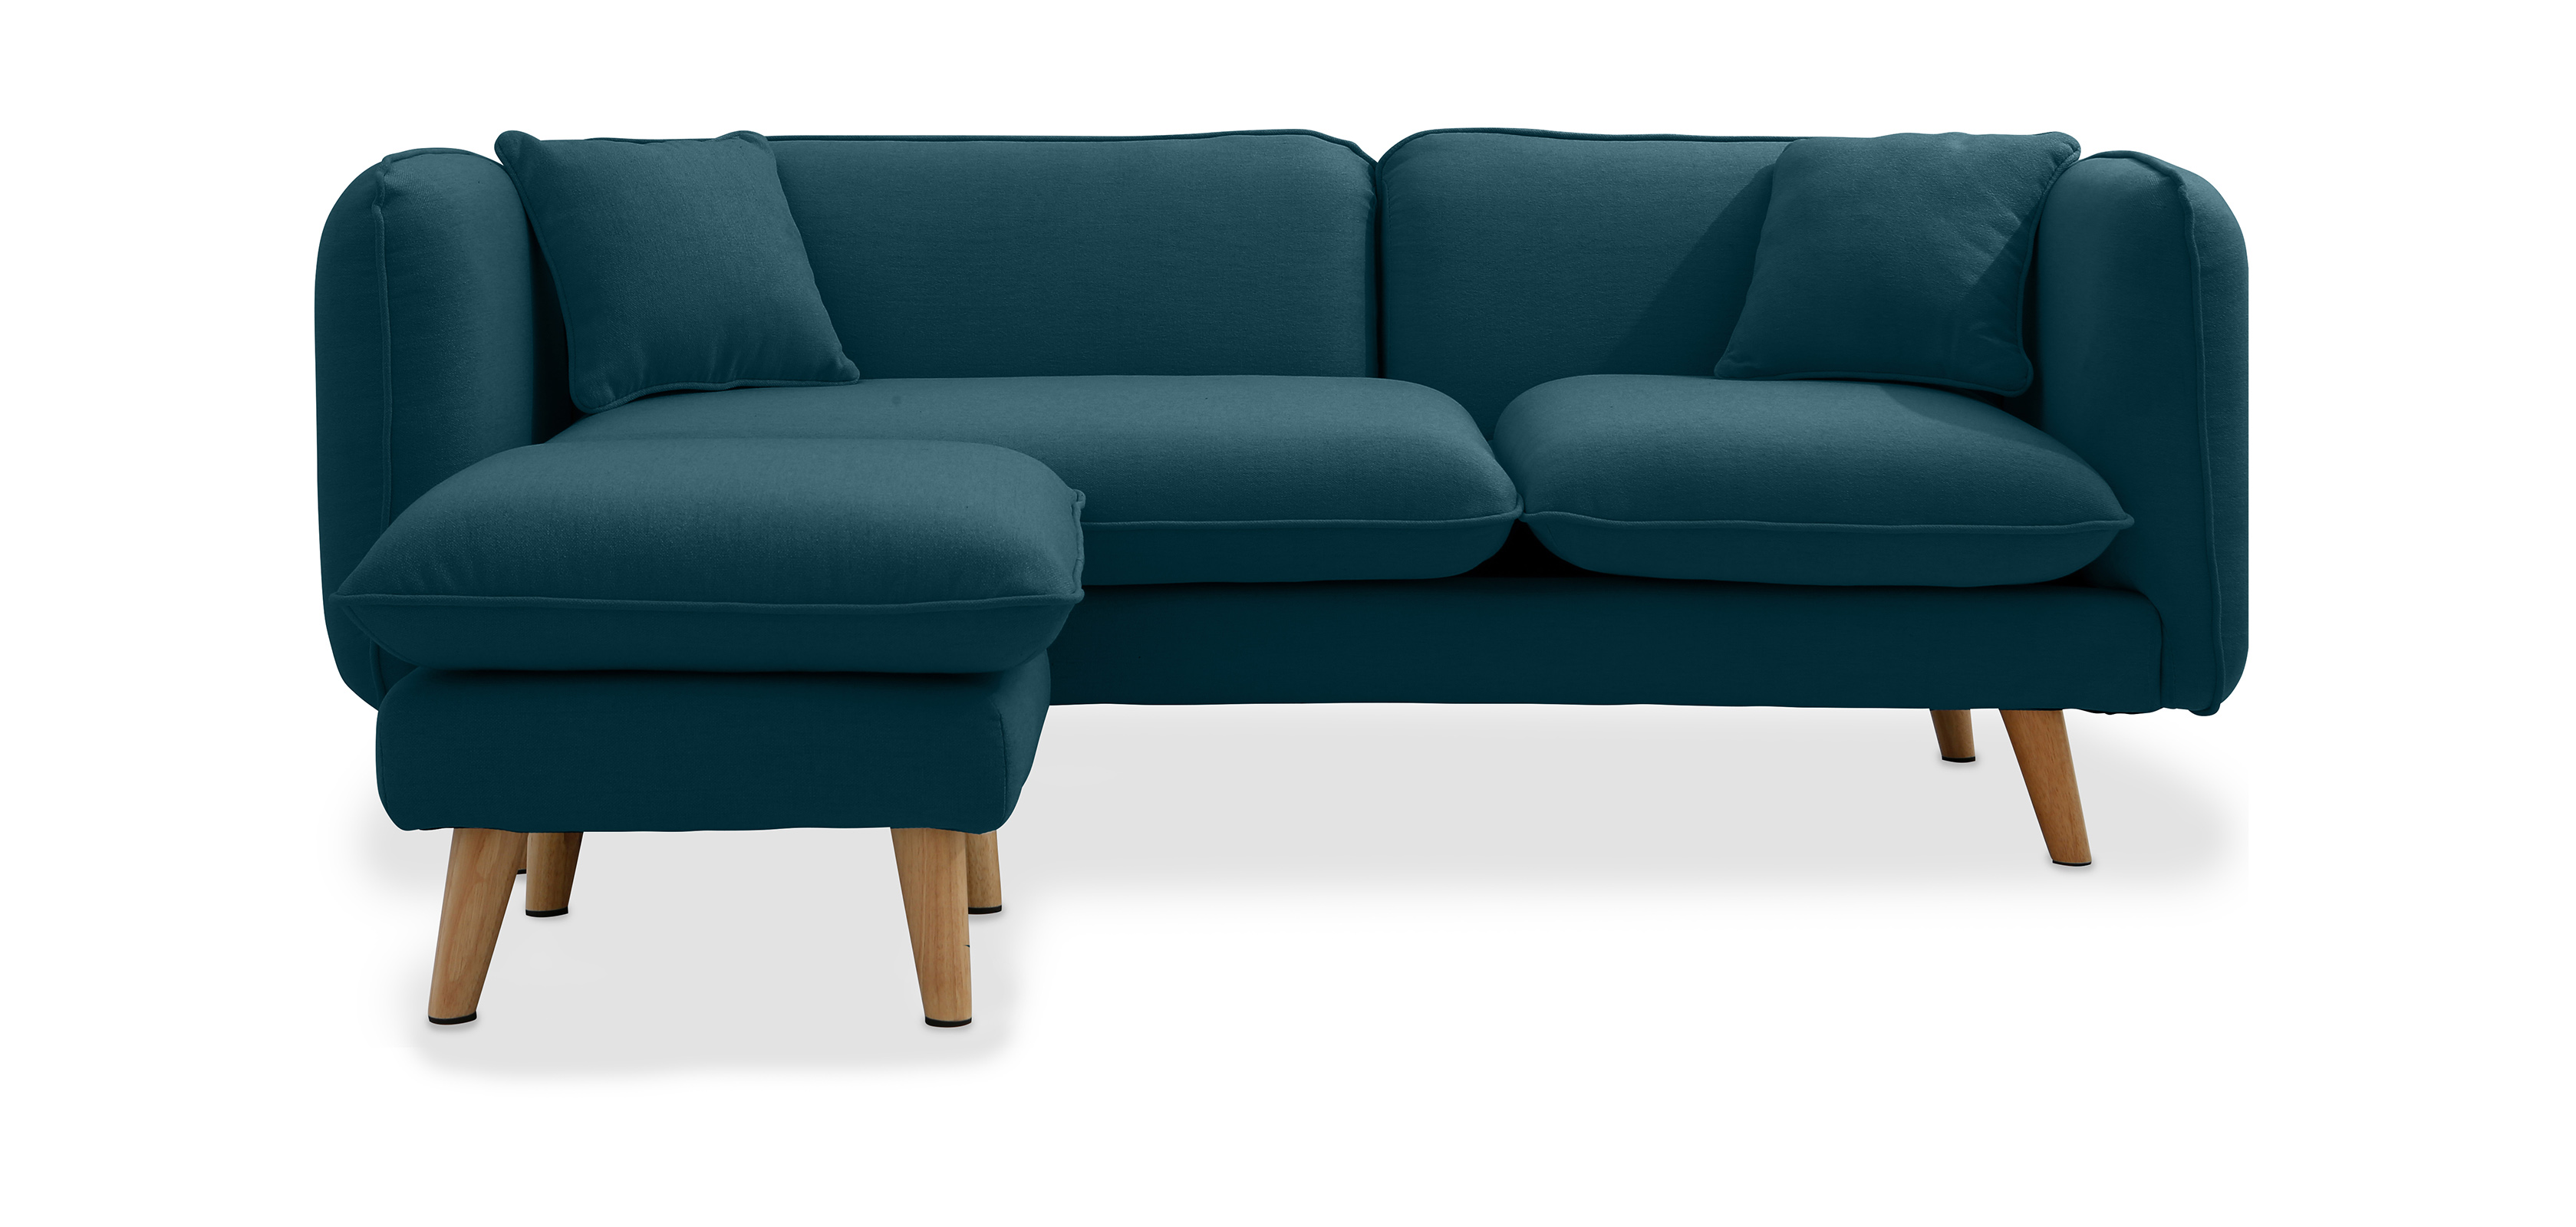 scandinavian designs leather sofa reviewcompare pavel nd jonas